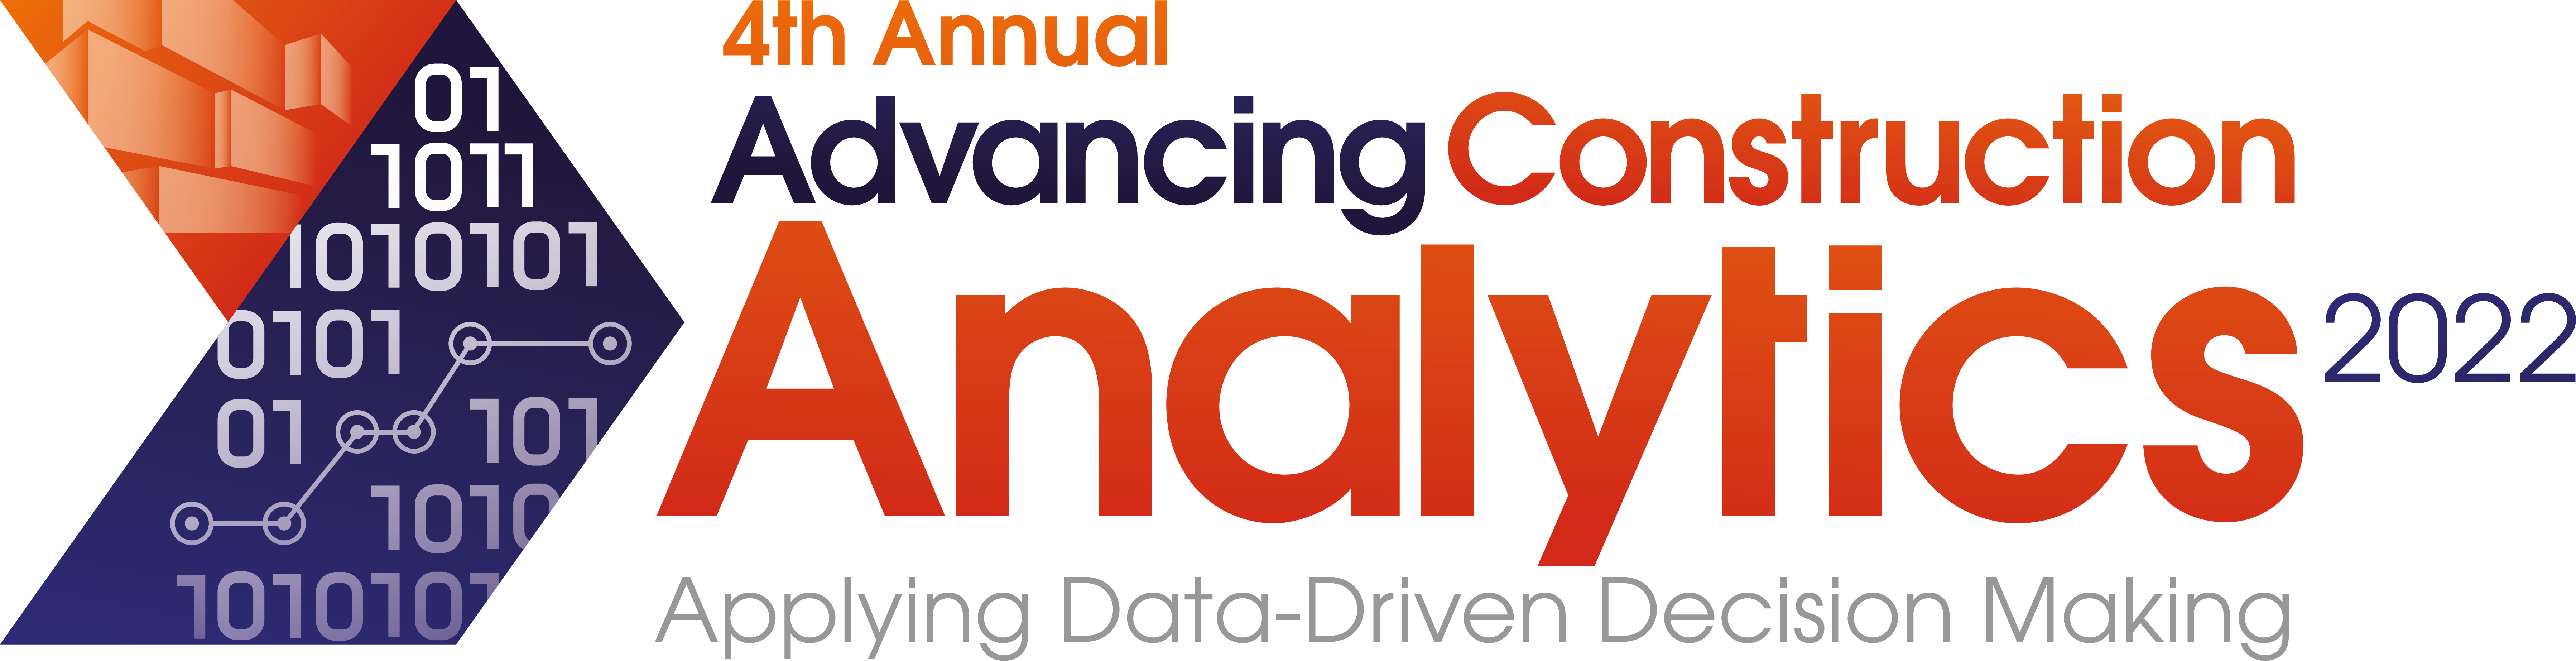 Advancing Construction Analytics 2022 logo